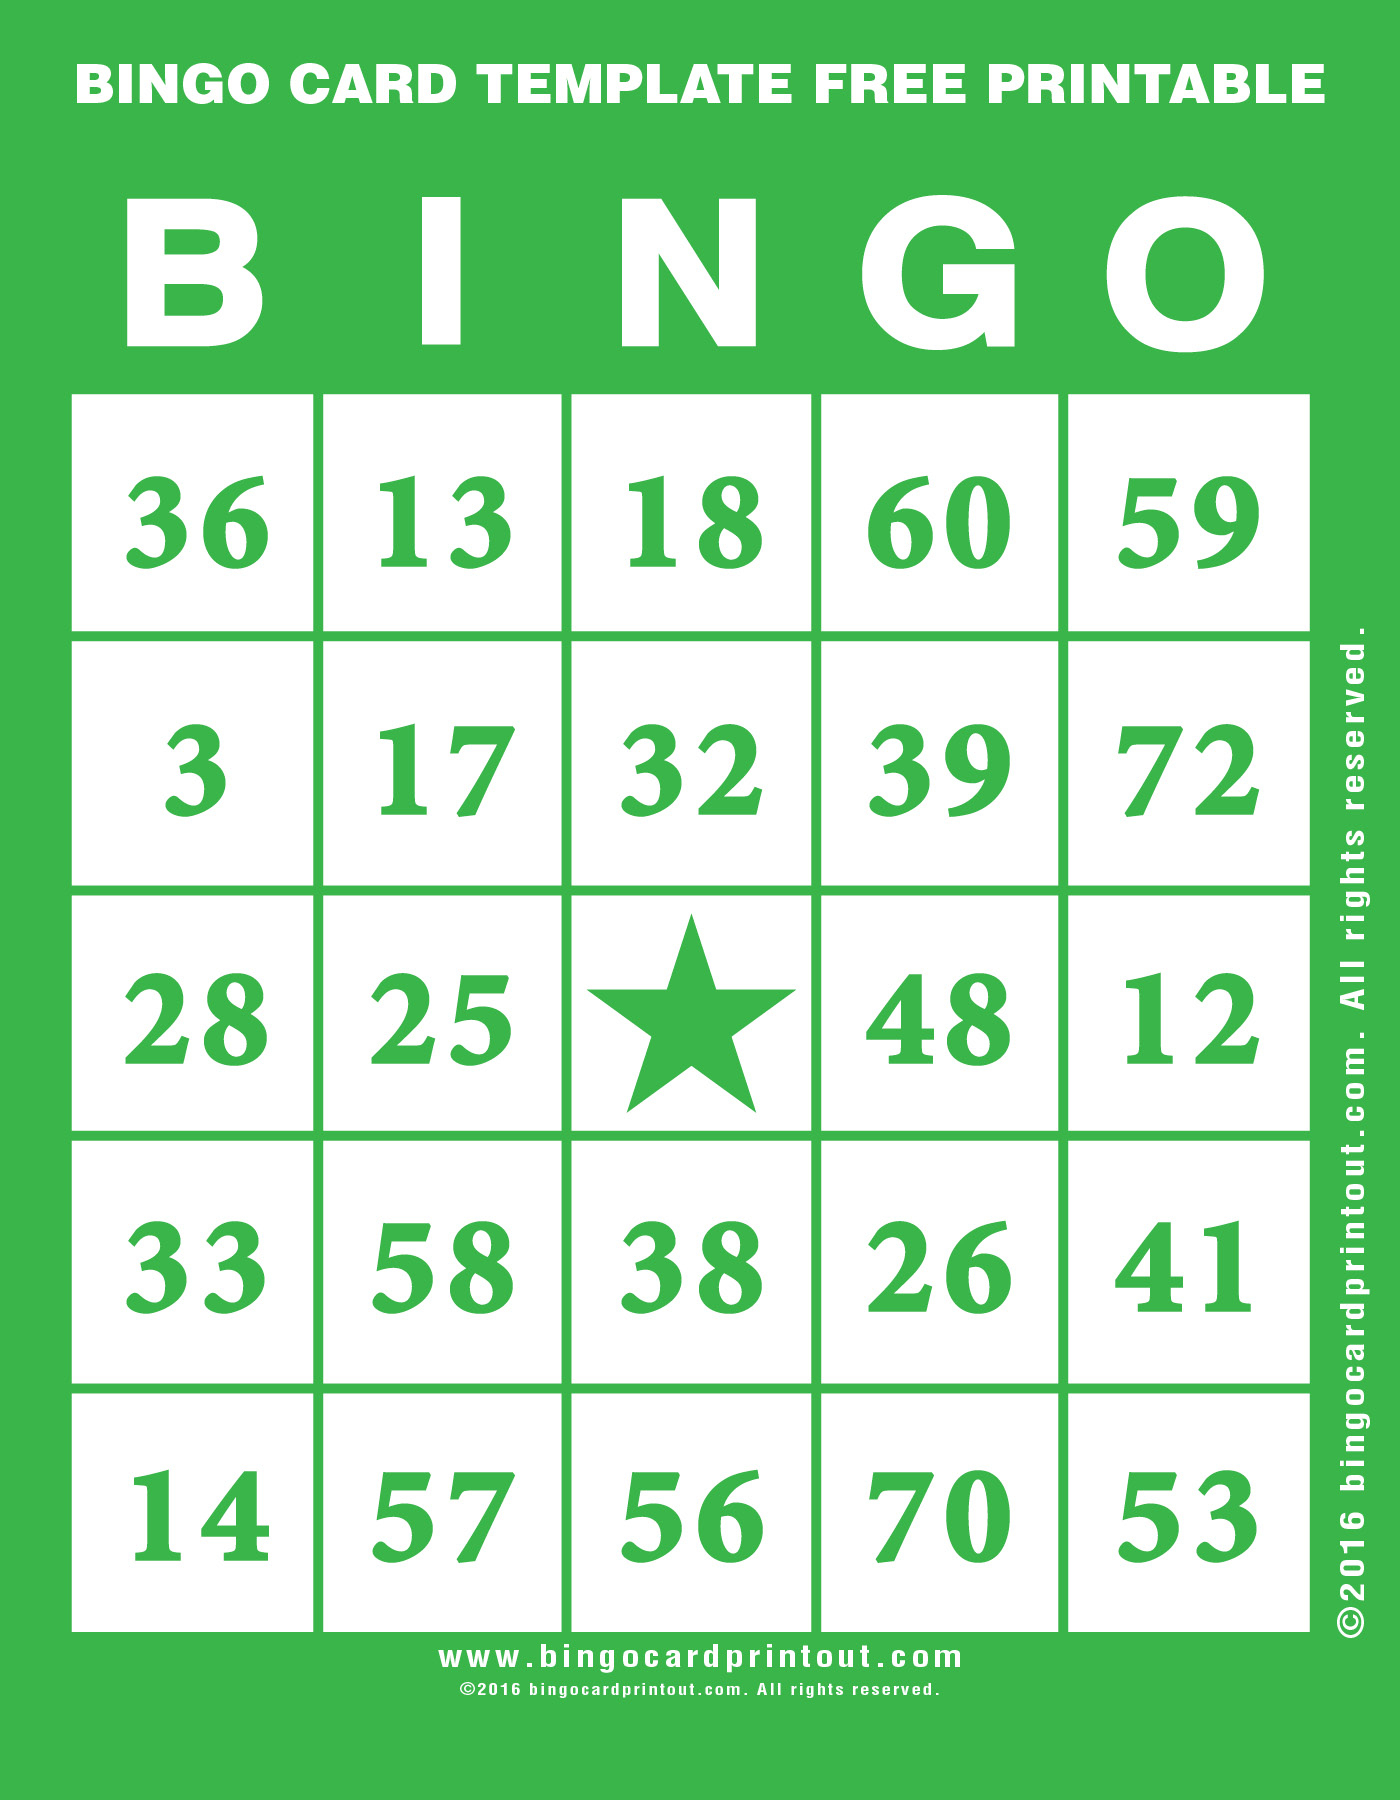 Bingo Card Template Free Printable - Bingocardprintout - Free Printable Bingo Cards